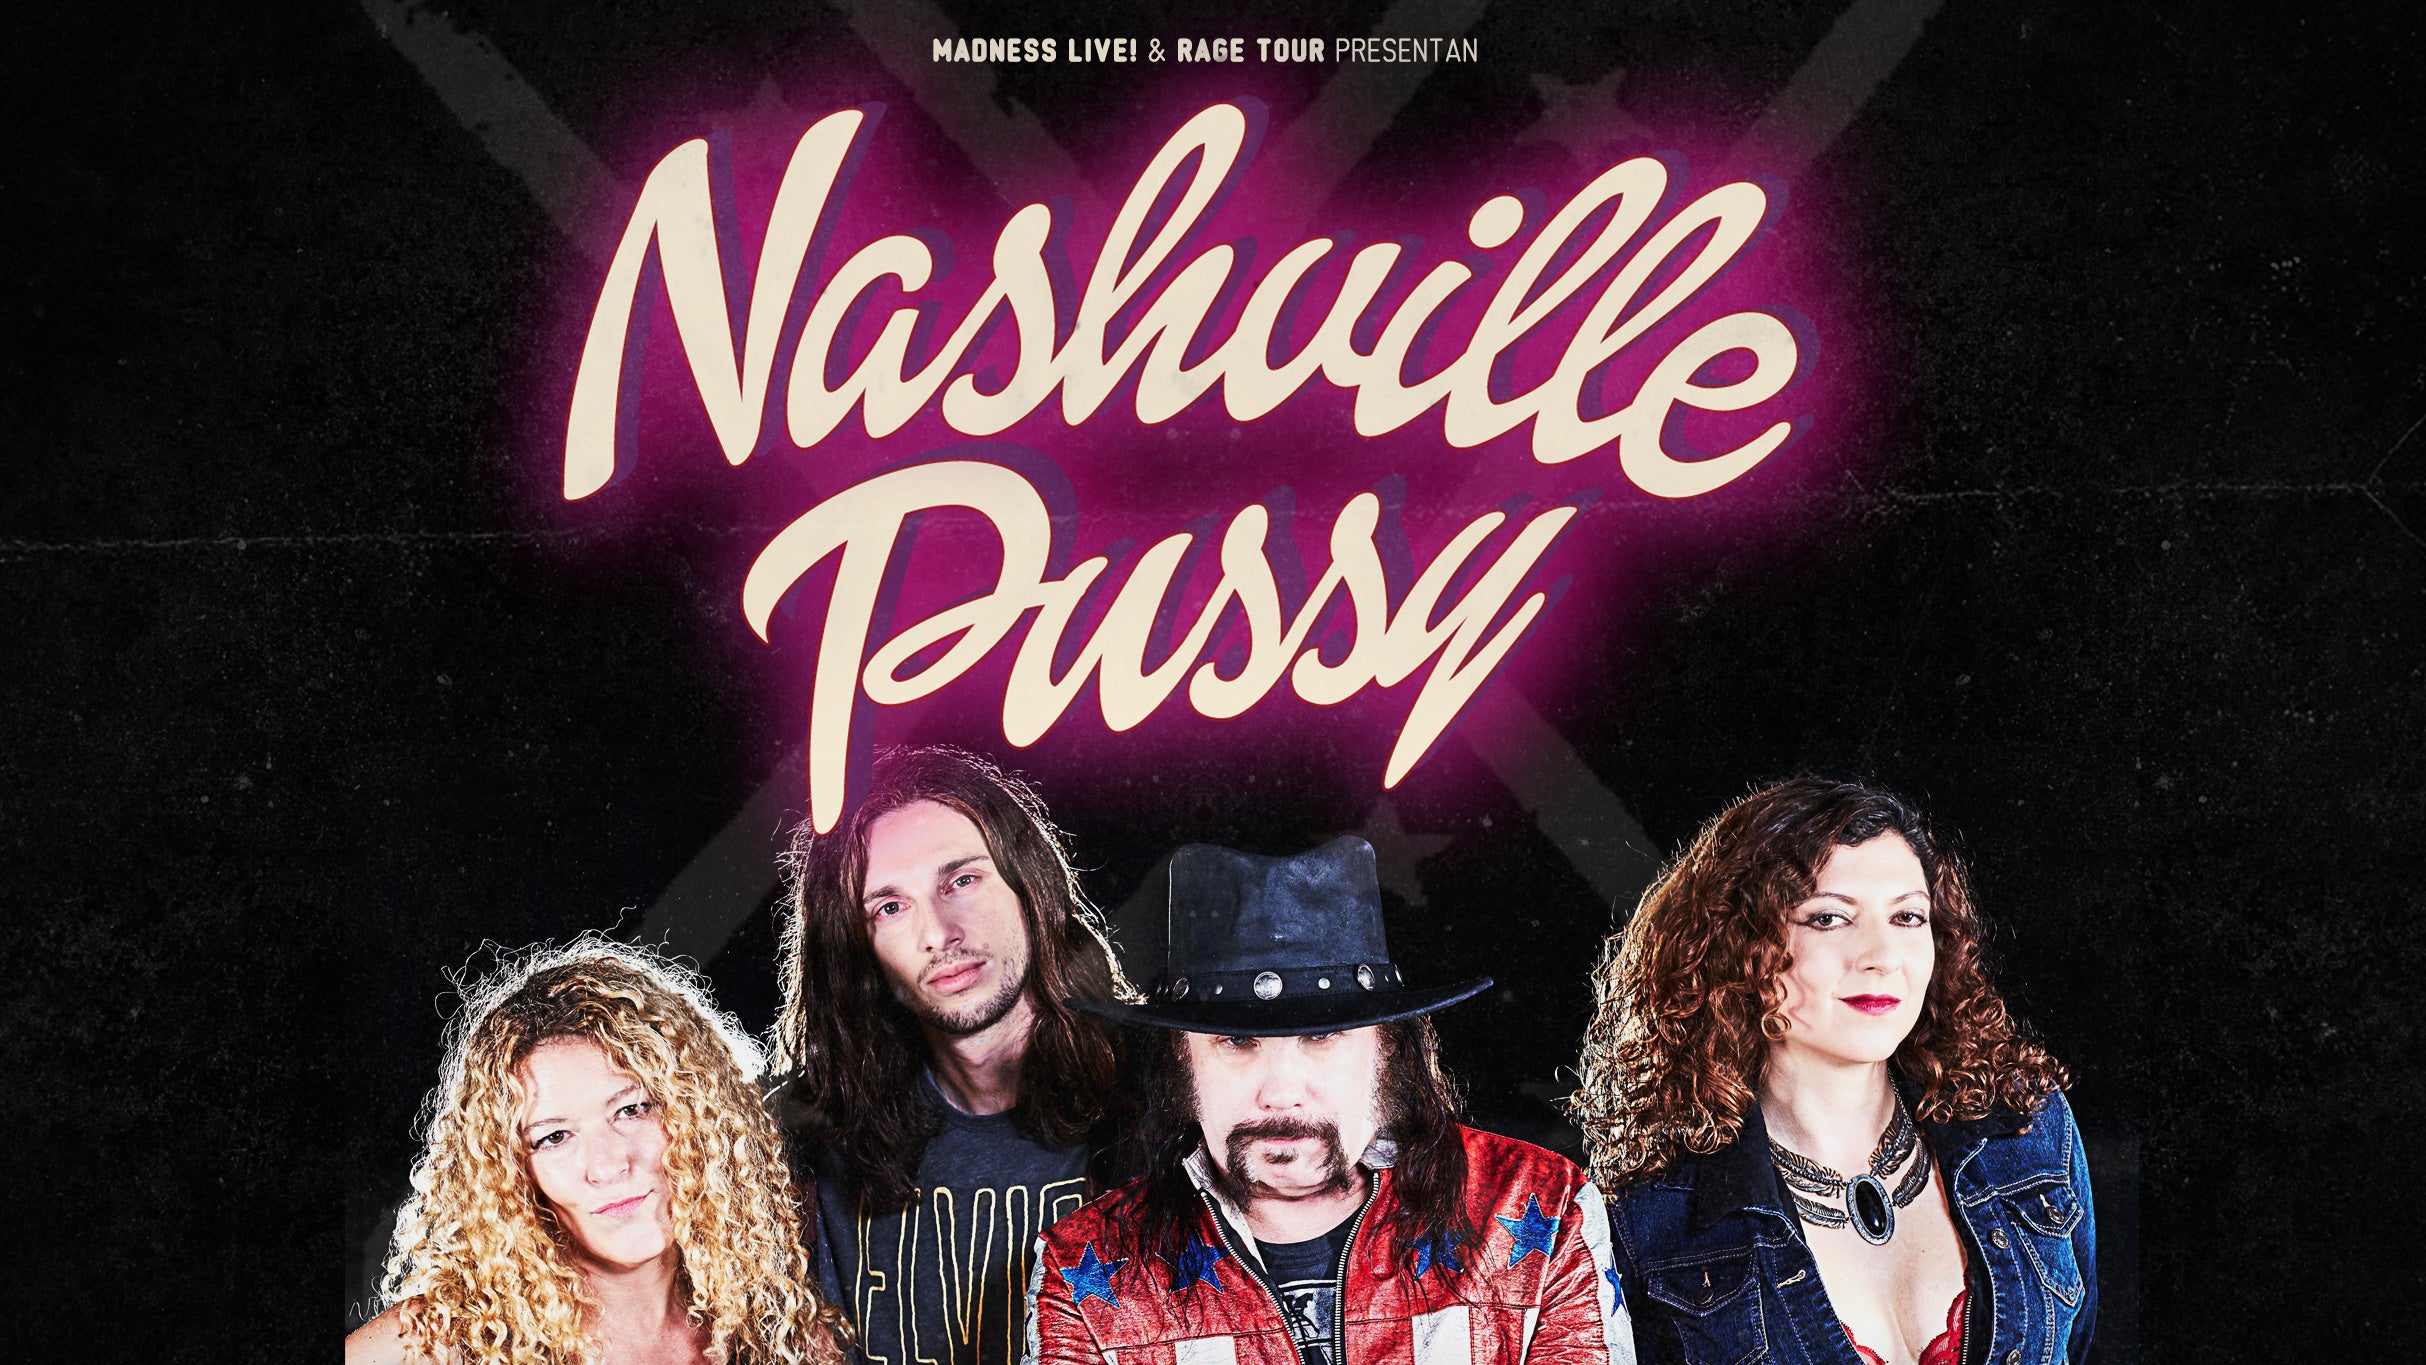 Nashville Pussy Event Title Pic